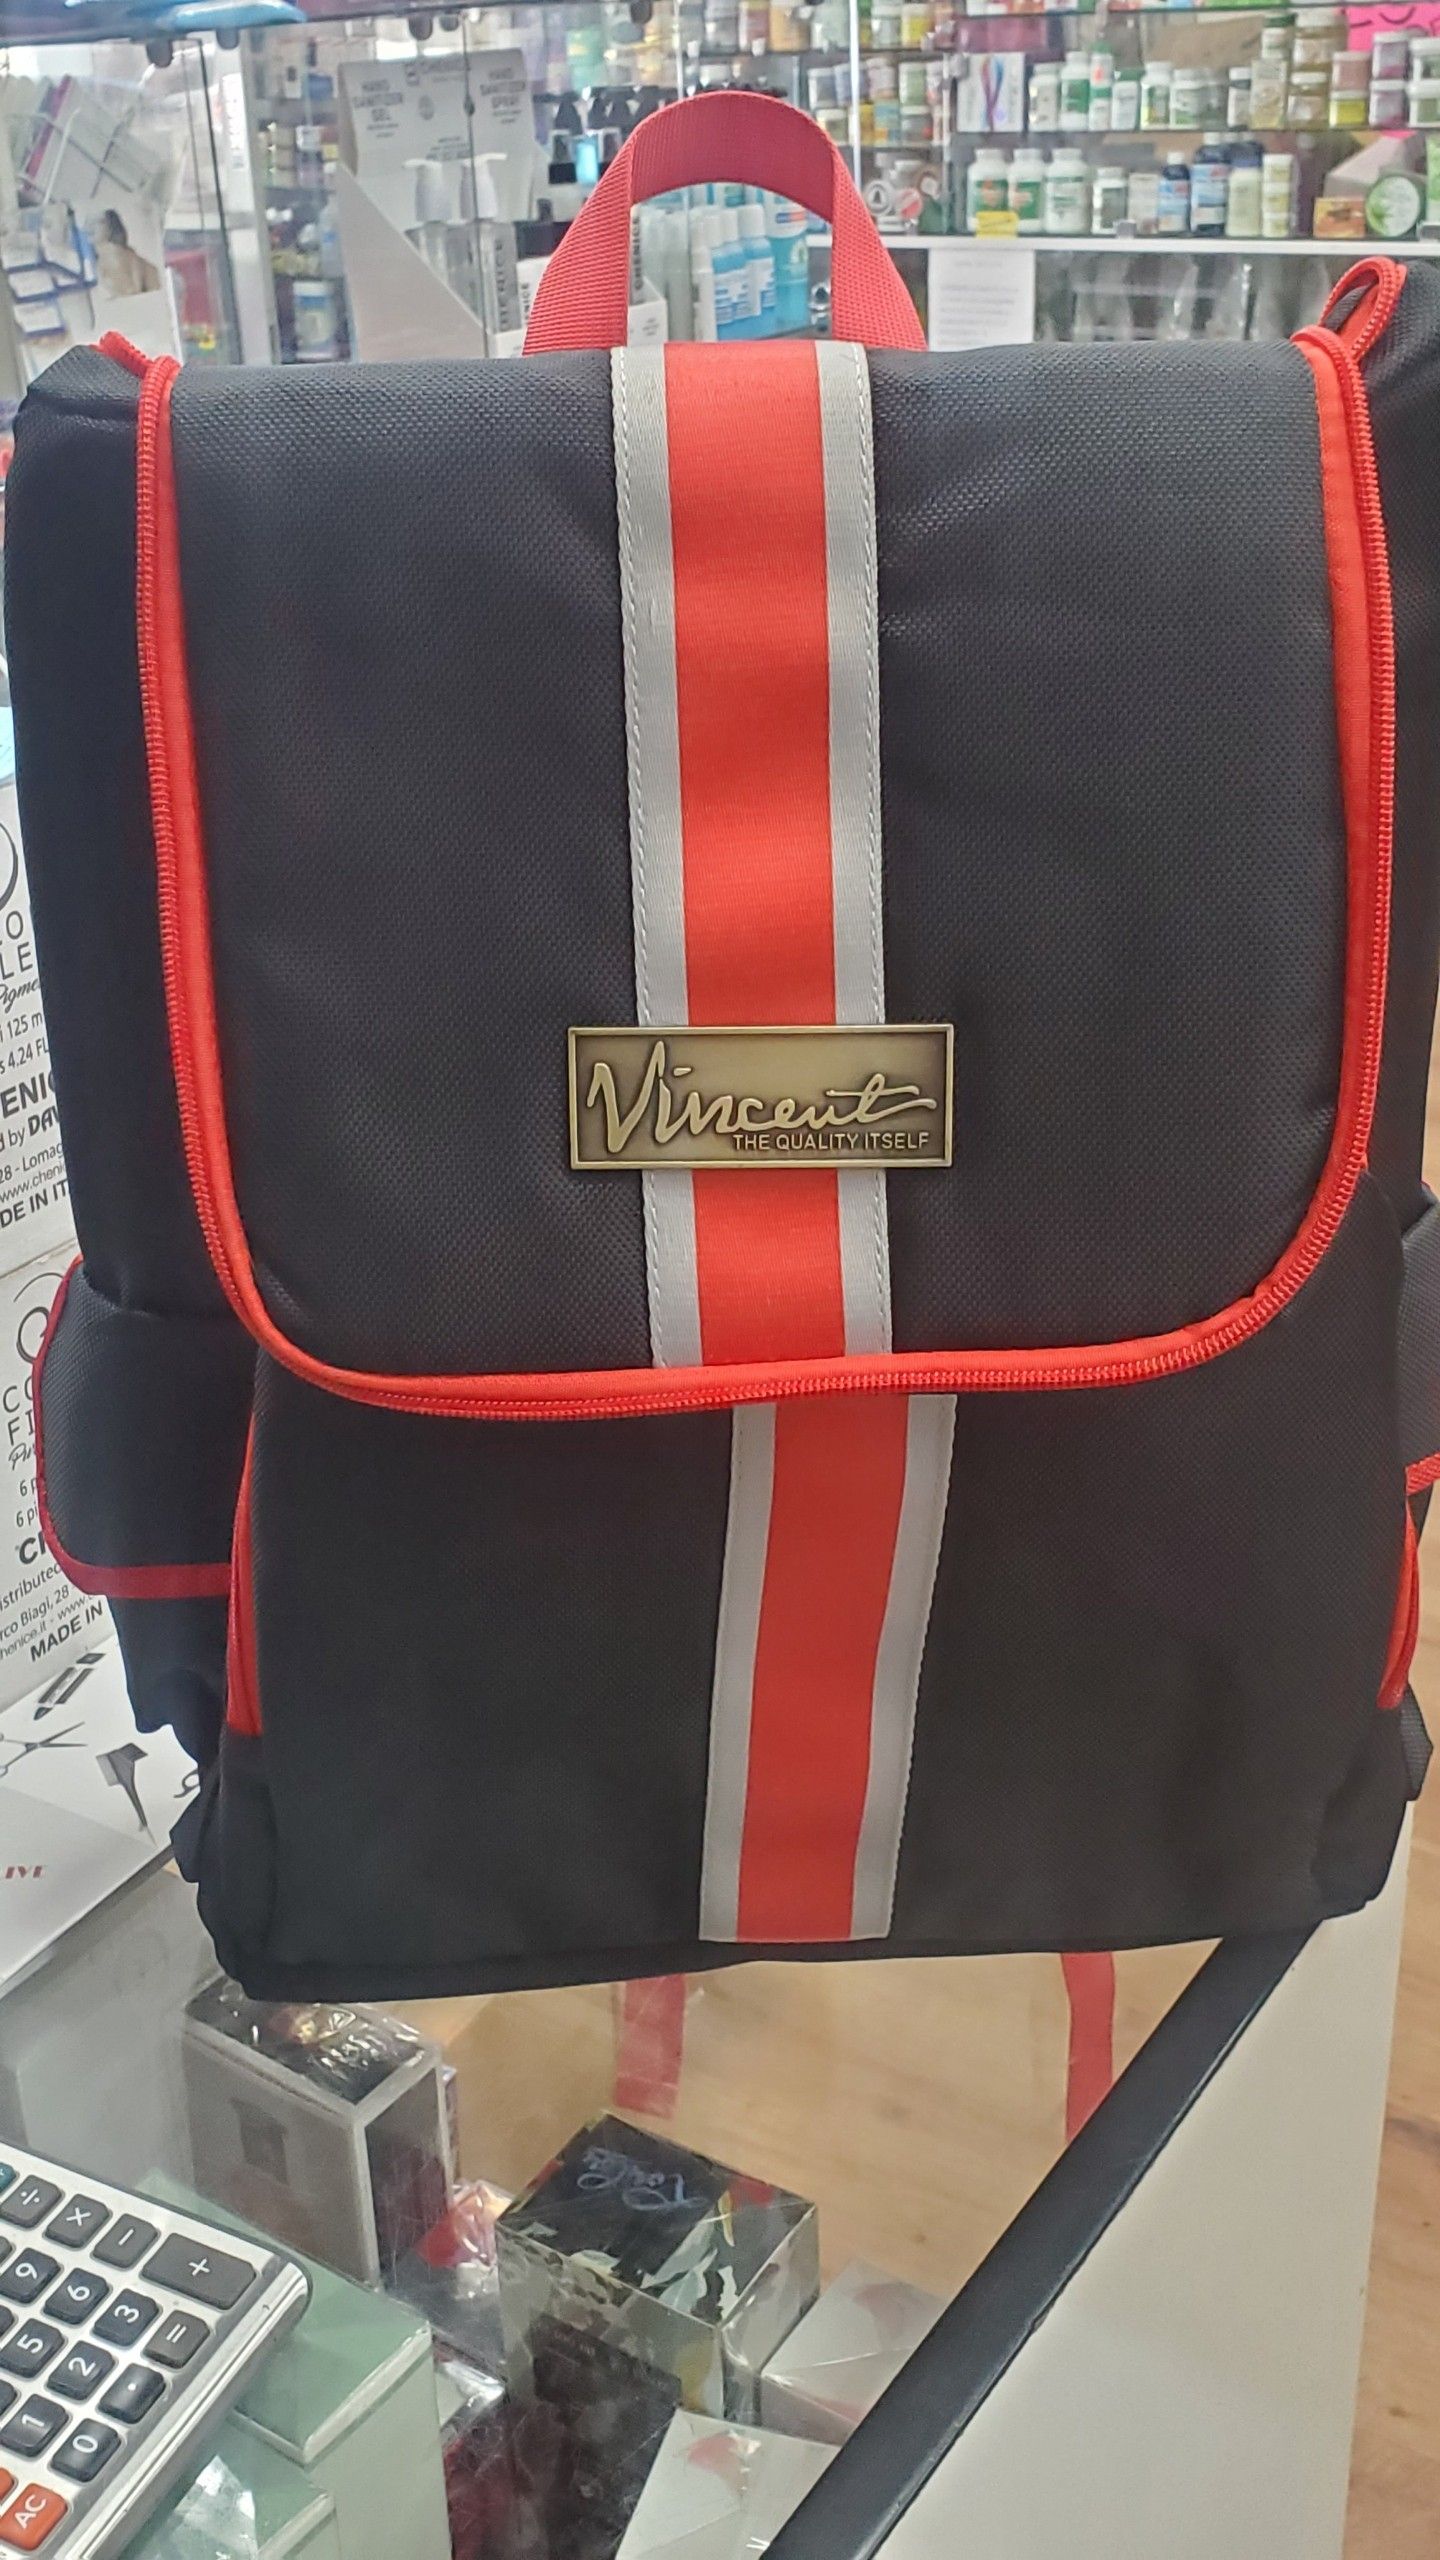 Vincent backpacks classic black